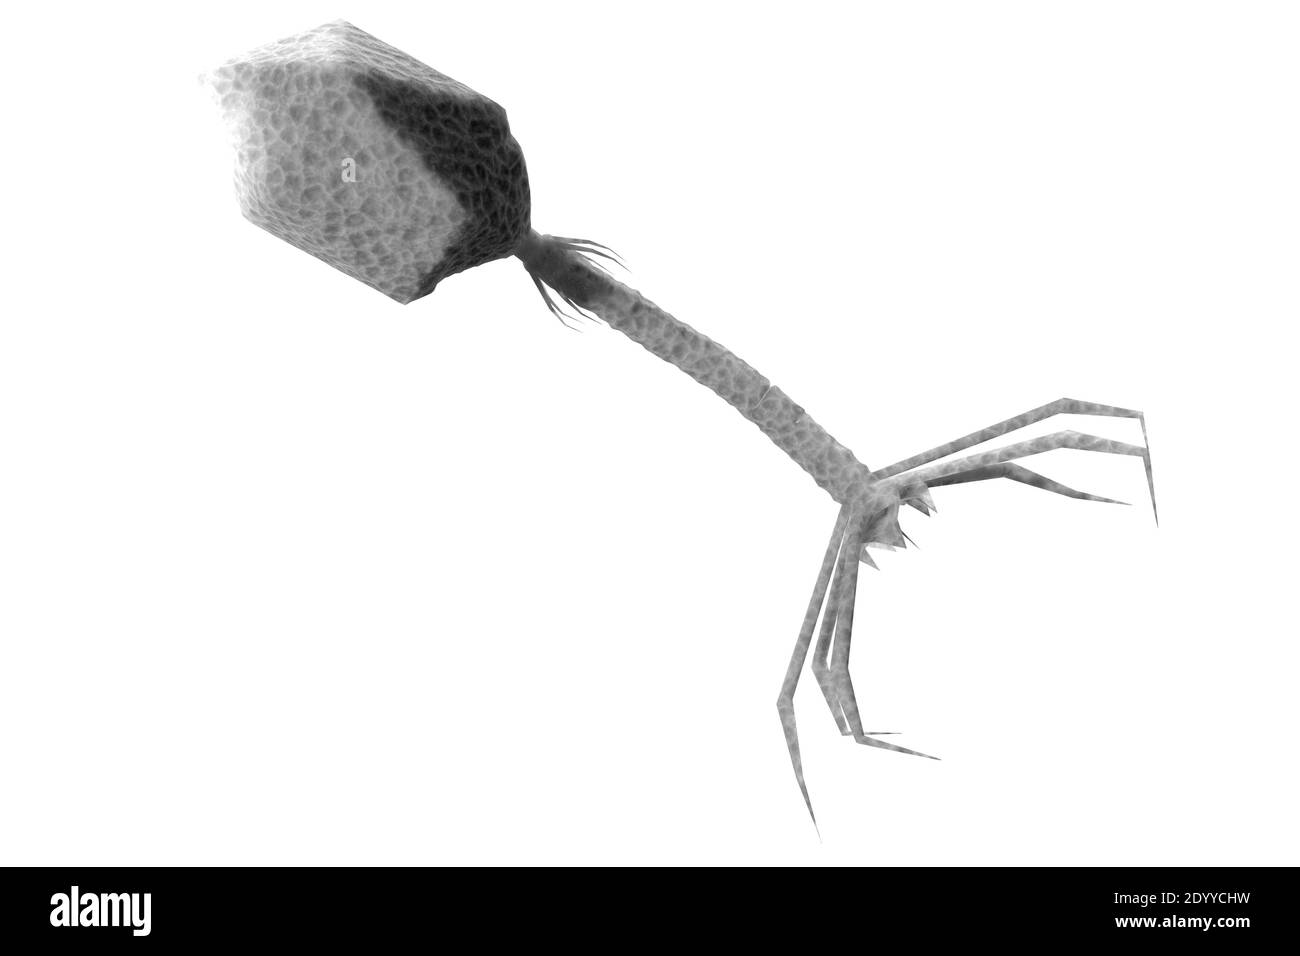 Closeup bacteriophage virus attacking bacteria cells 3D illustration Stock Photo